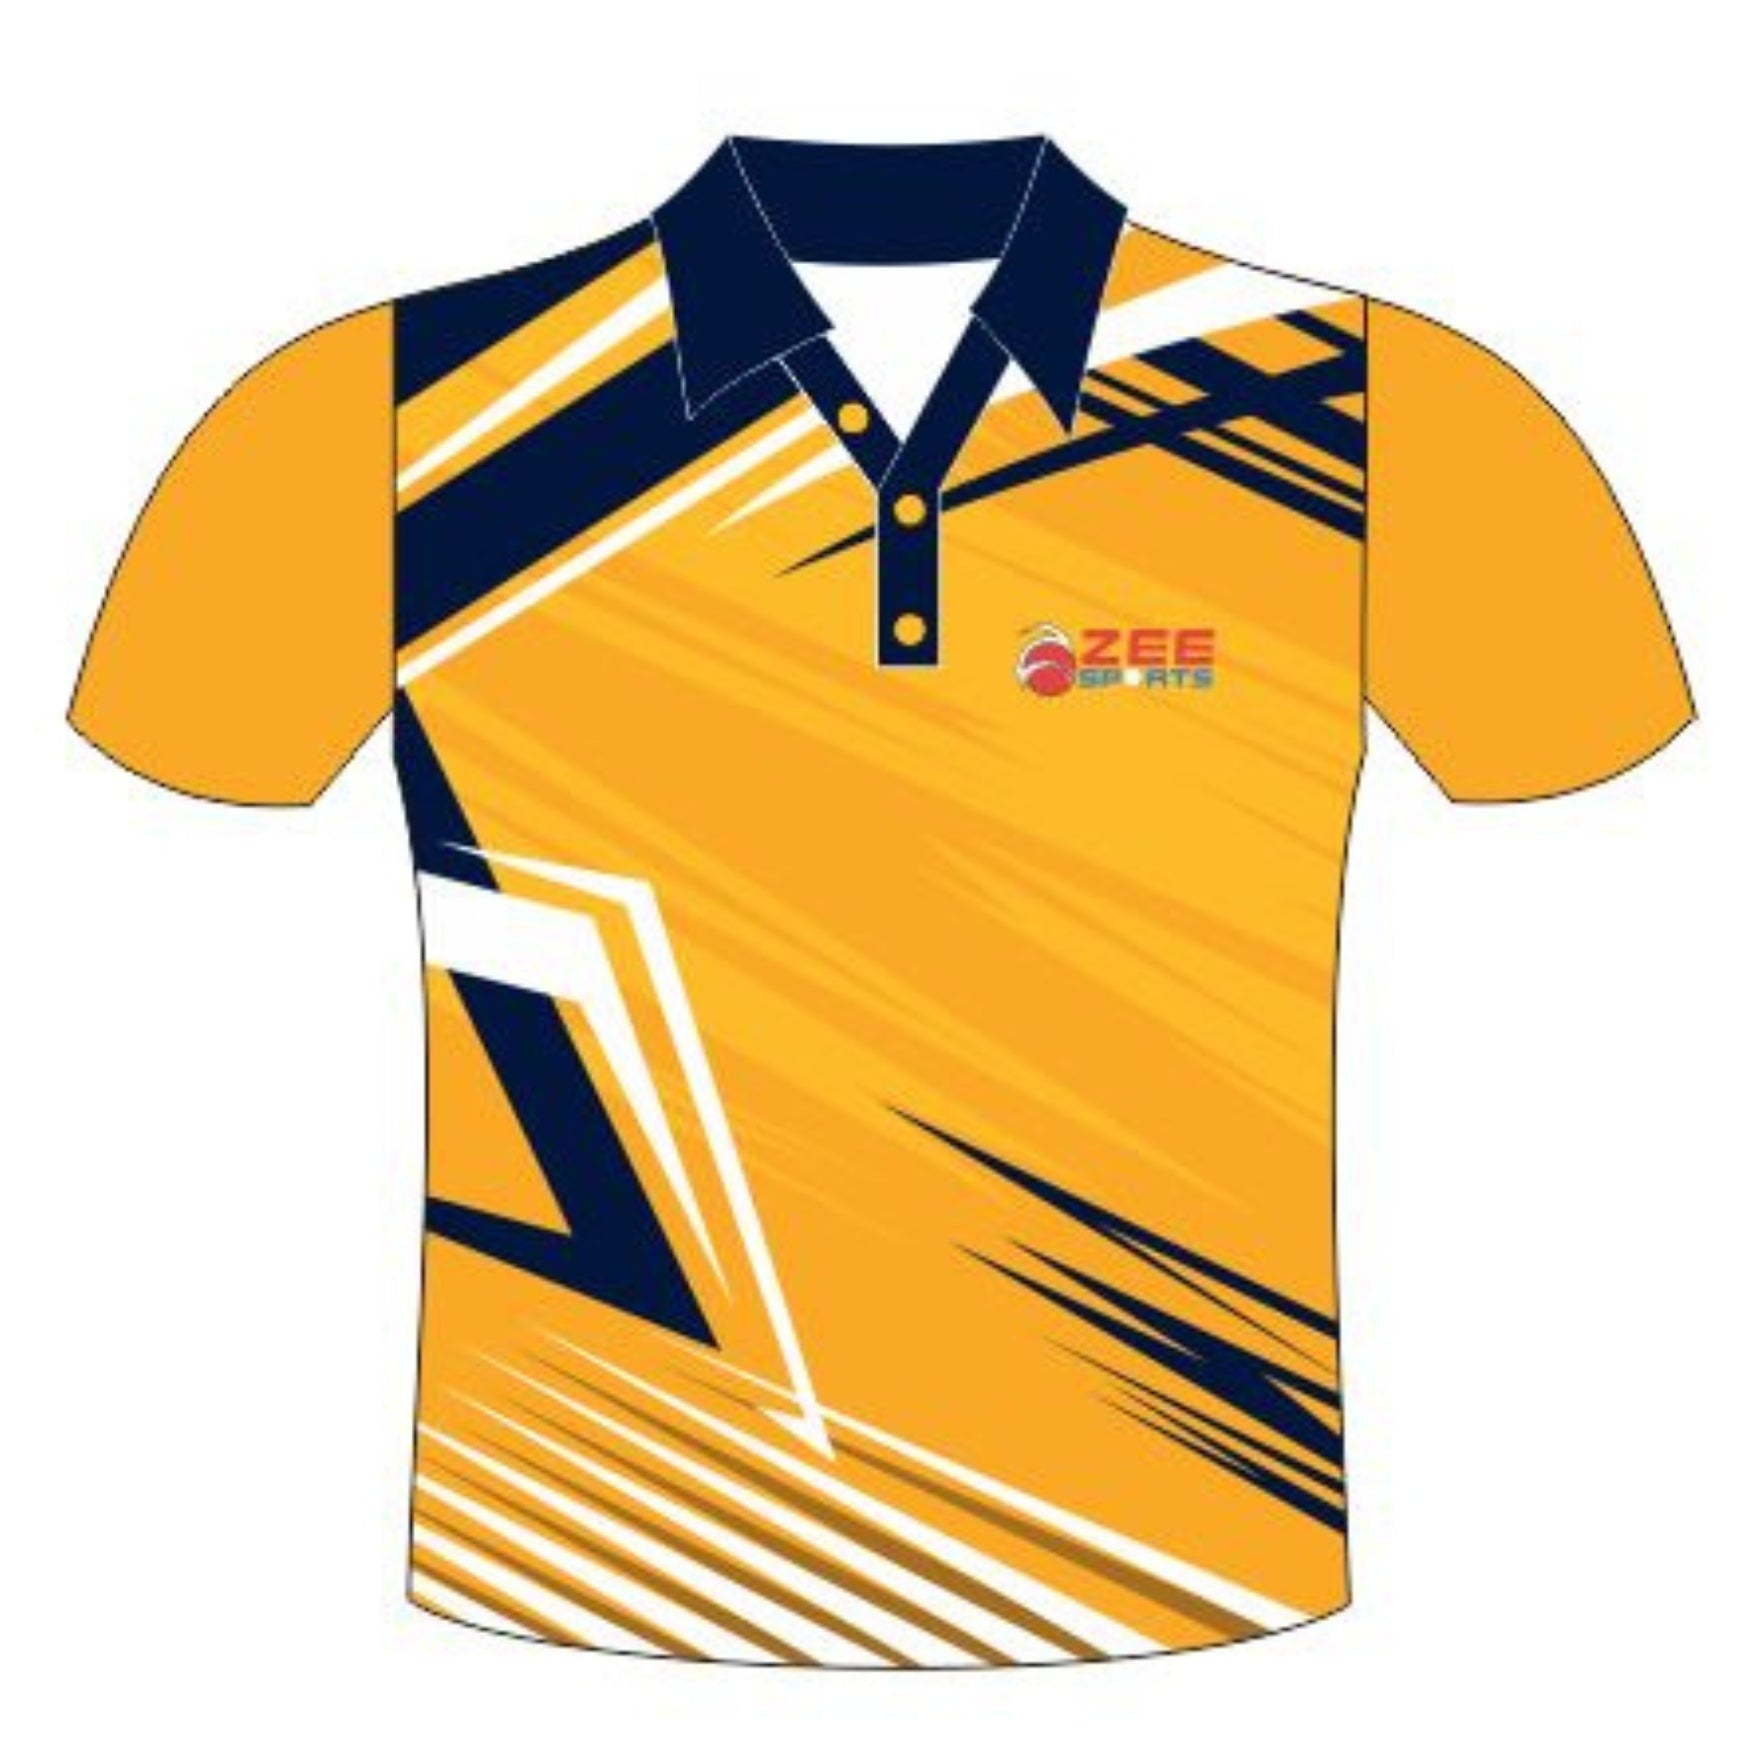 039 | Zee Sports 20 Color Uniform Team Full Kit 42